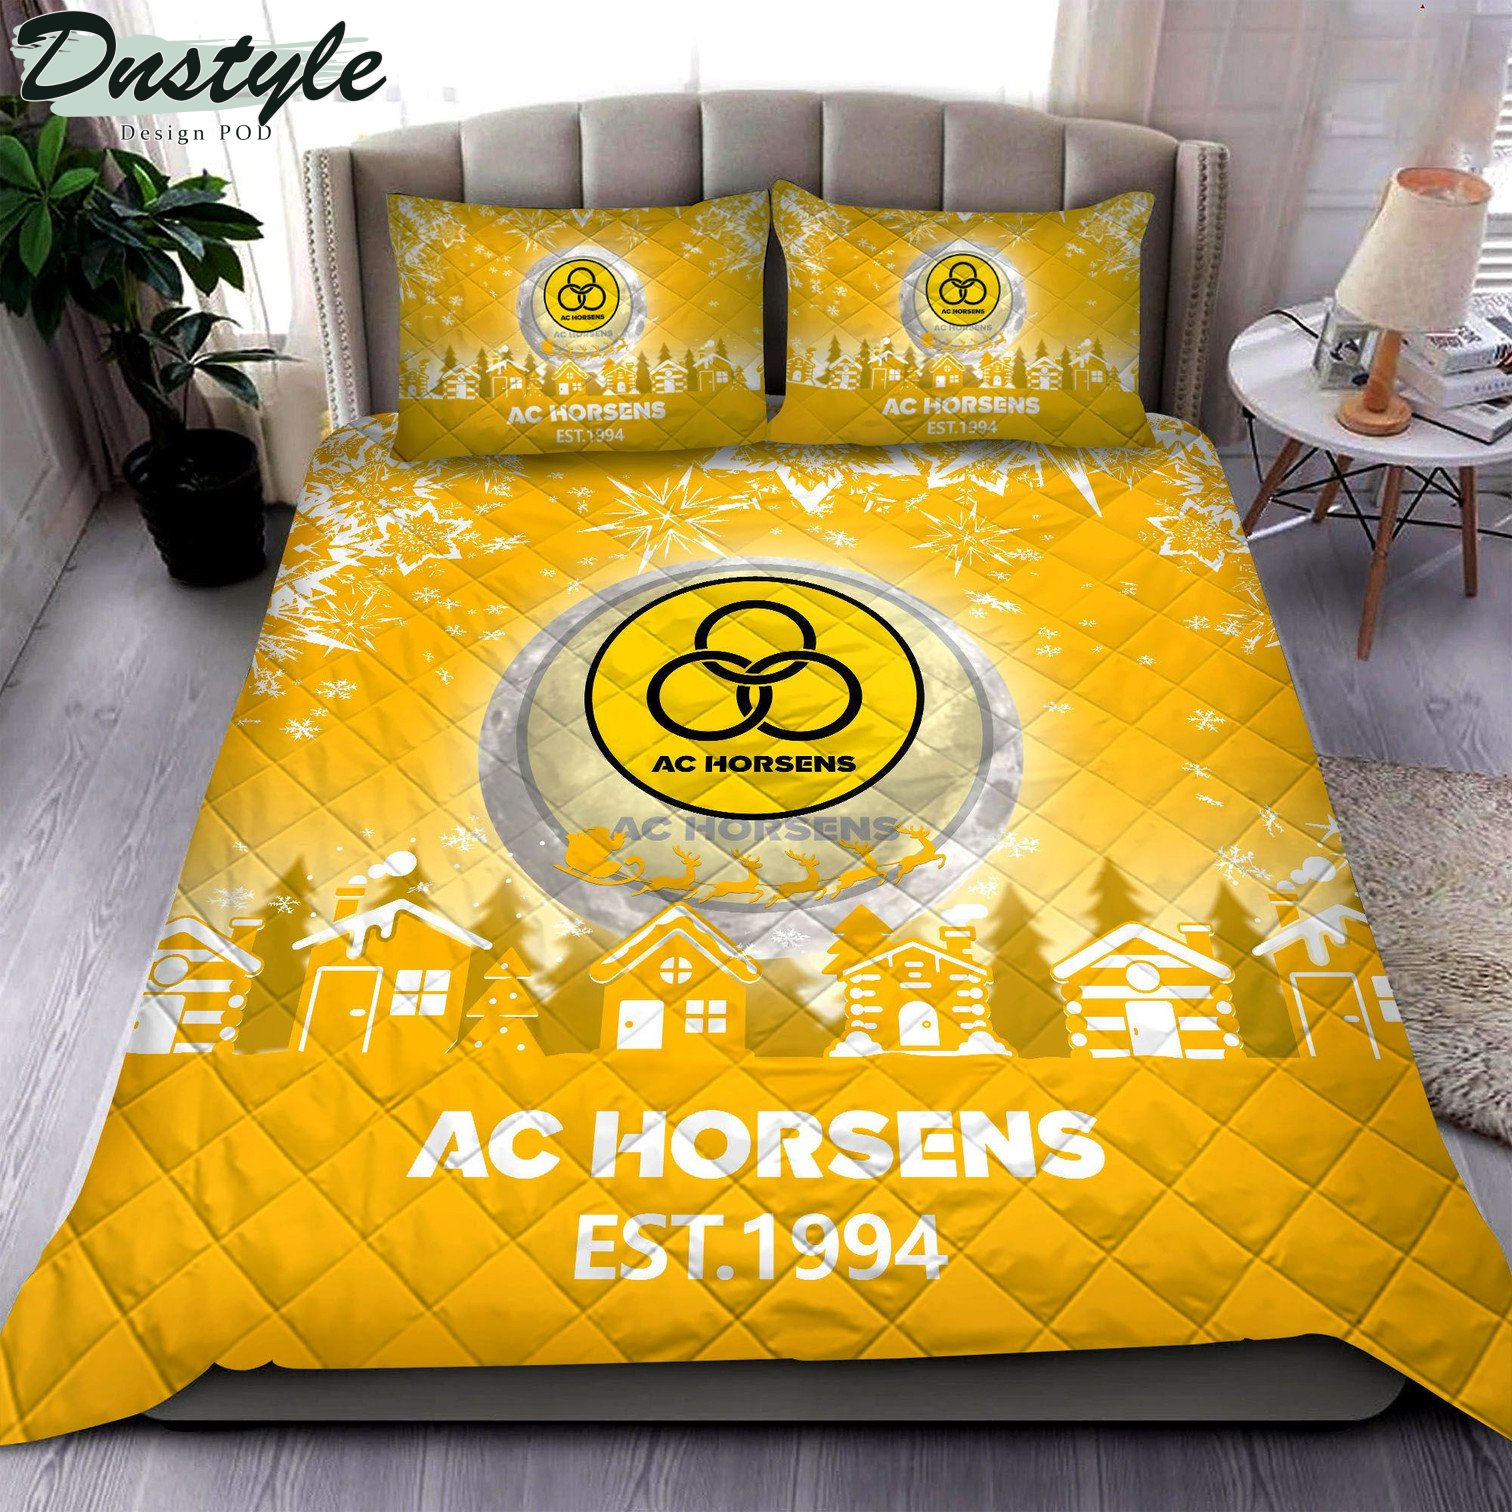 AC Horsens bedding set